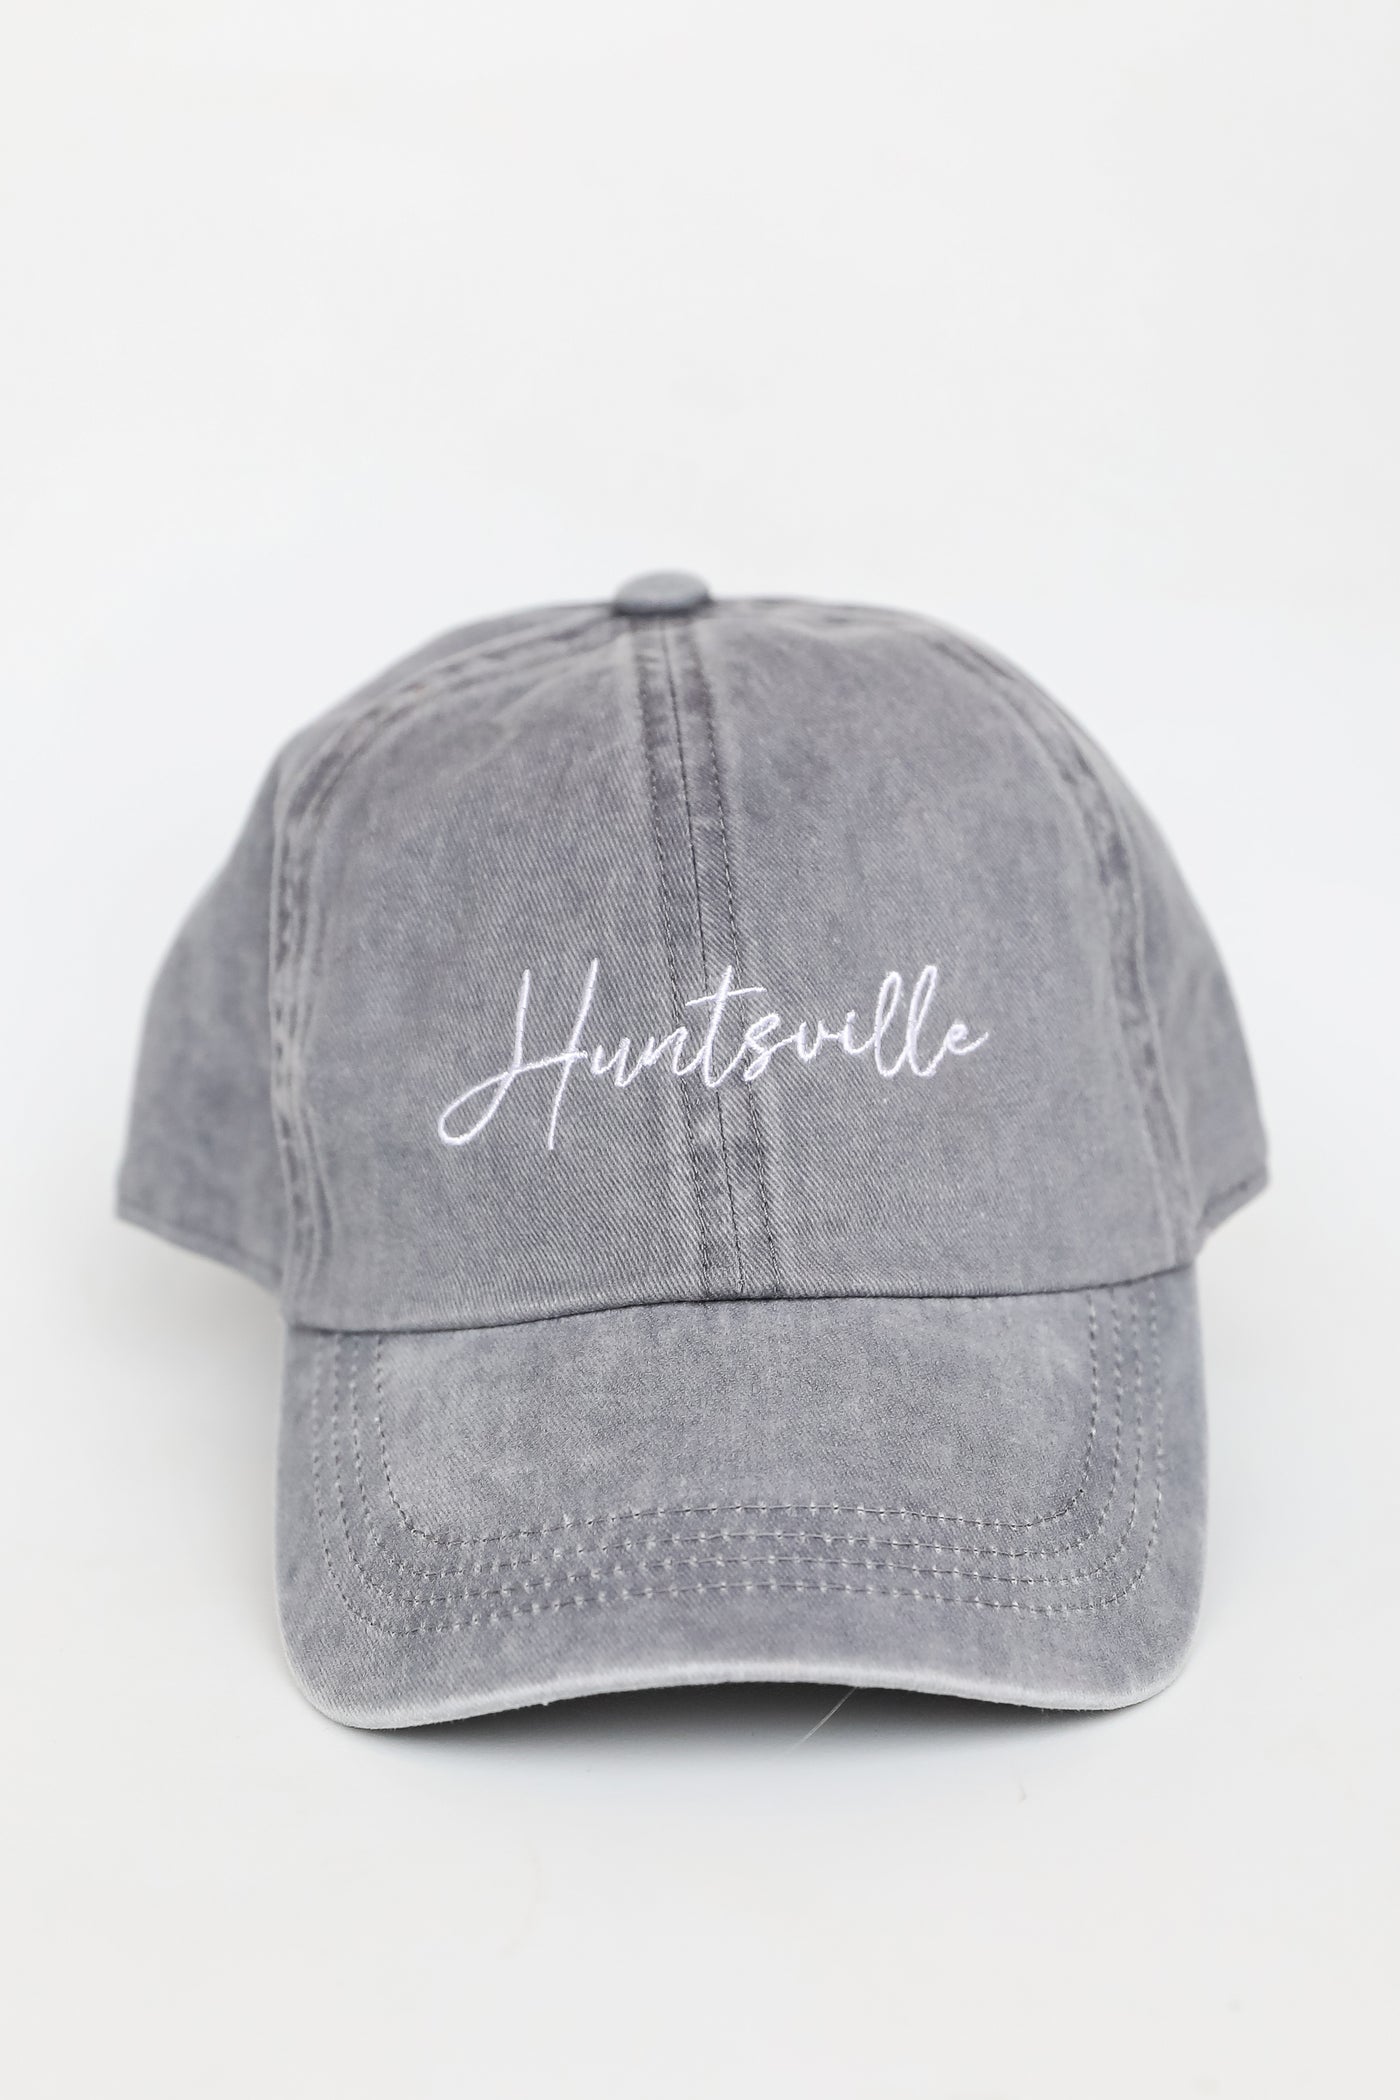 Huntsville Embroidered Hat